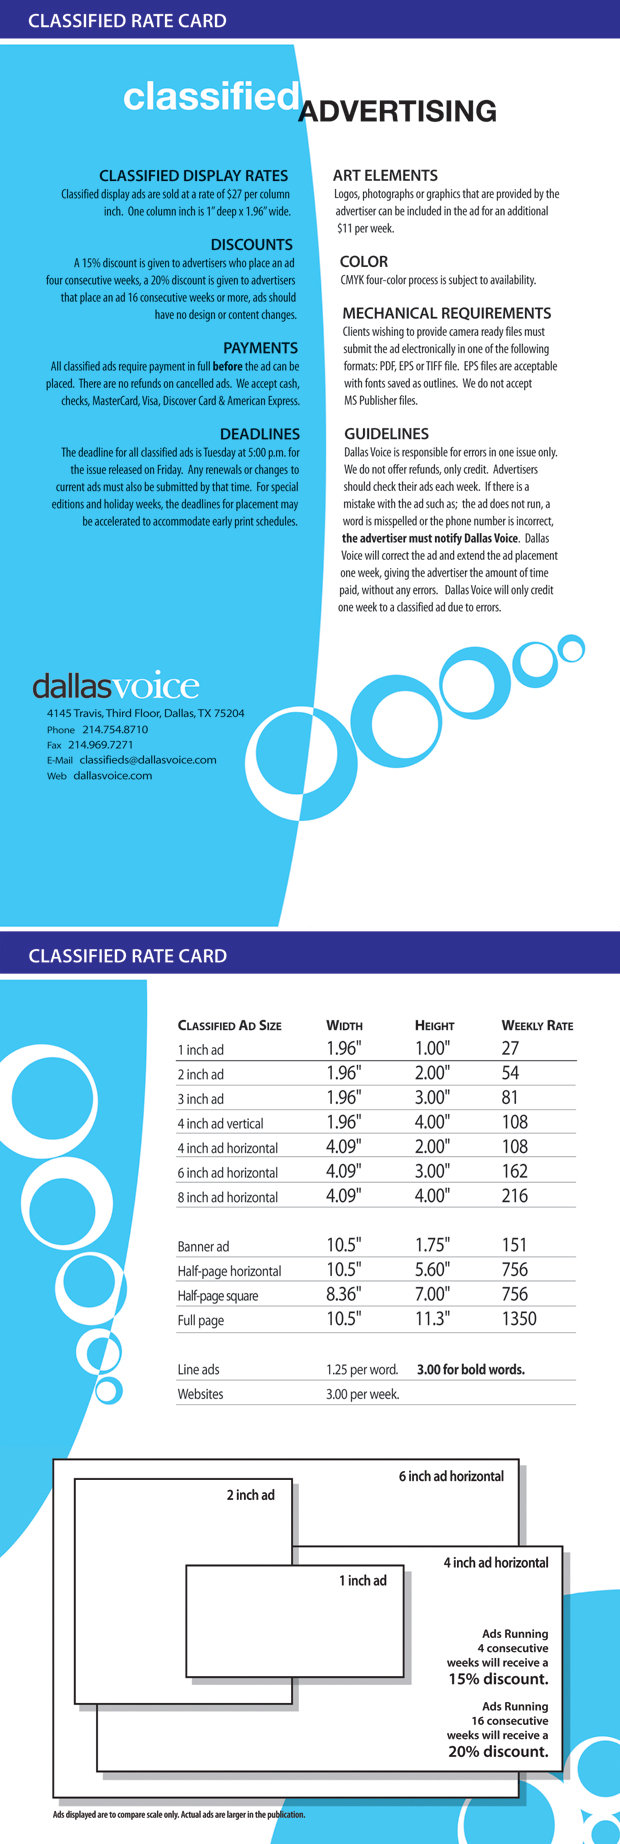 Dallas Voice Print Classified Rates